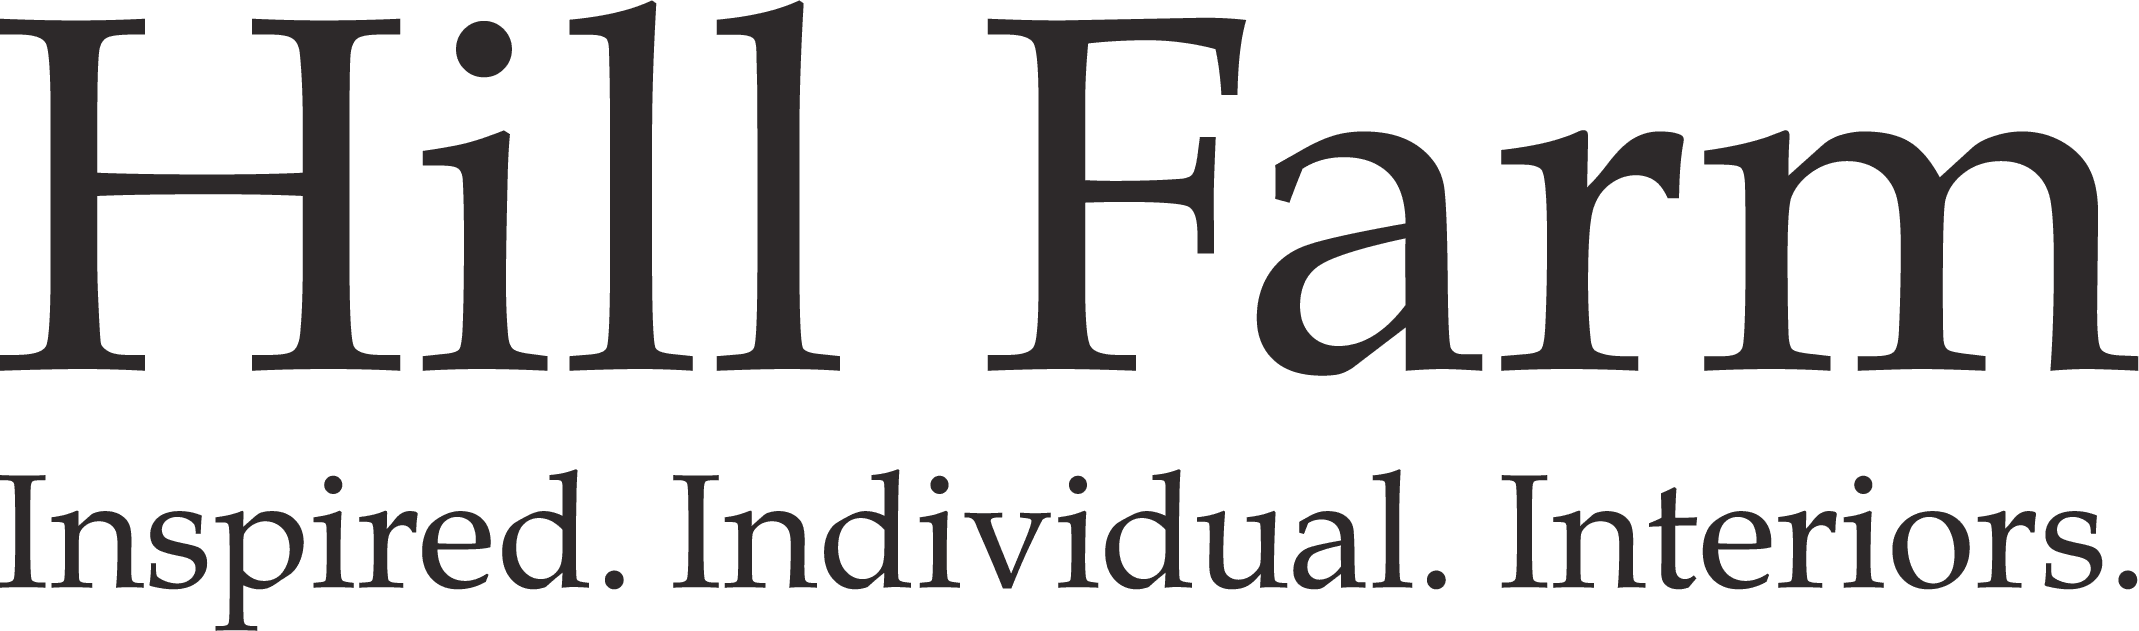 Hill Farm logo